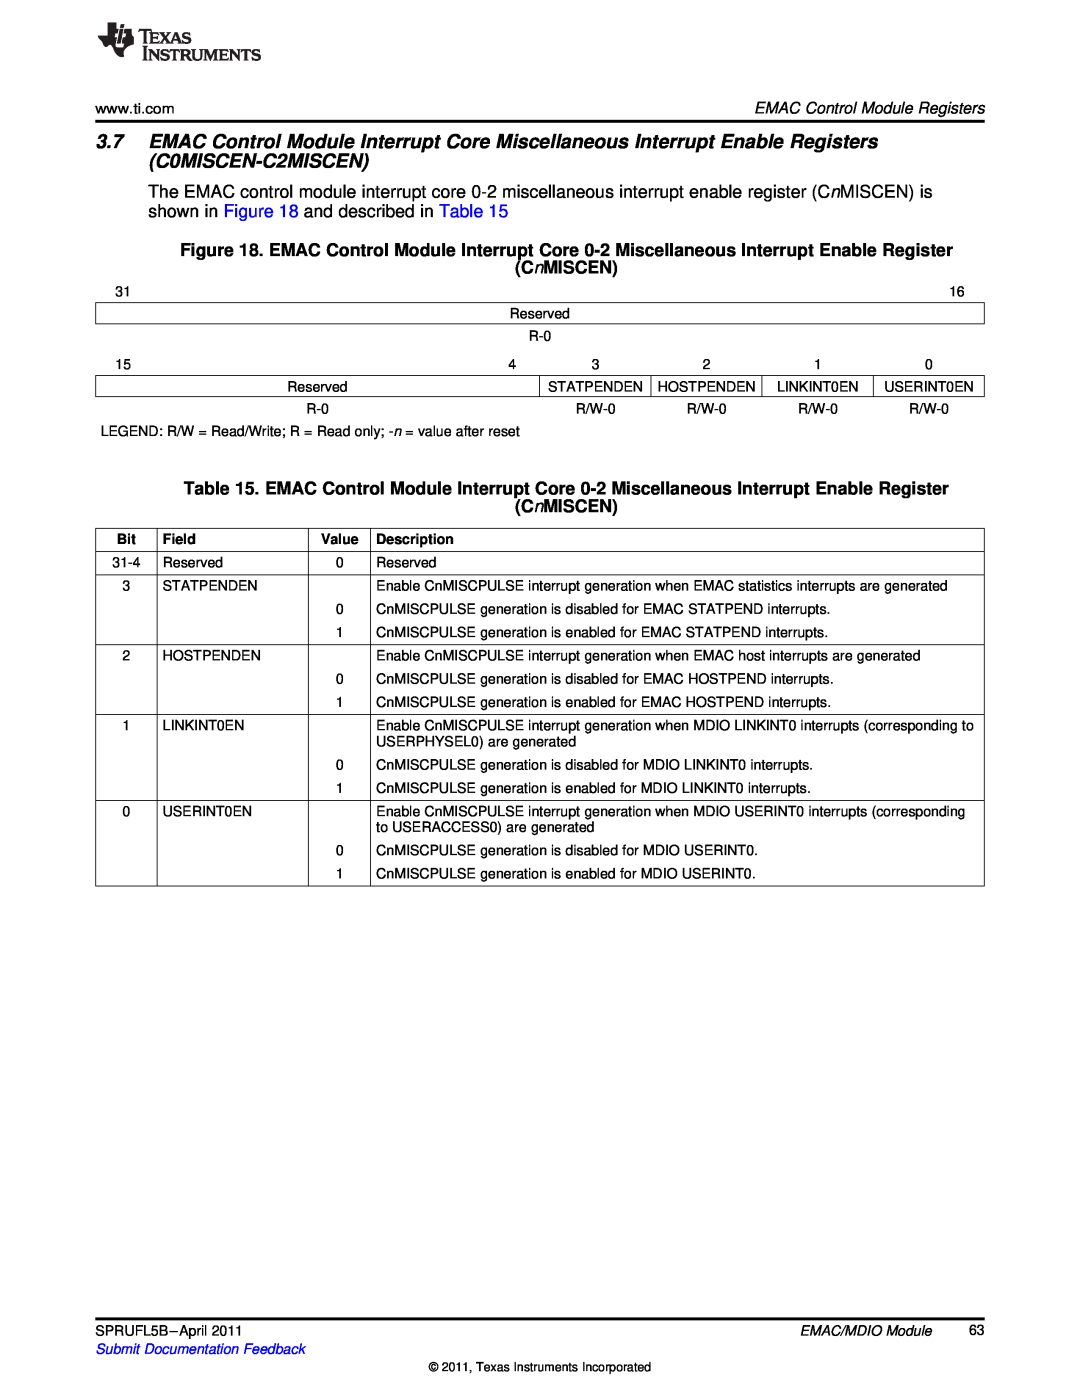 Texas Instruments TMS320C674X manual CnMISCEN, Field, Value, Description, Submit Documentation Feedback 